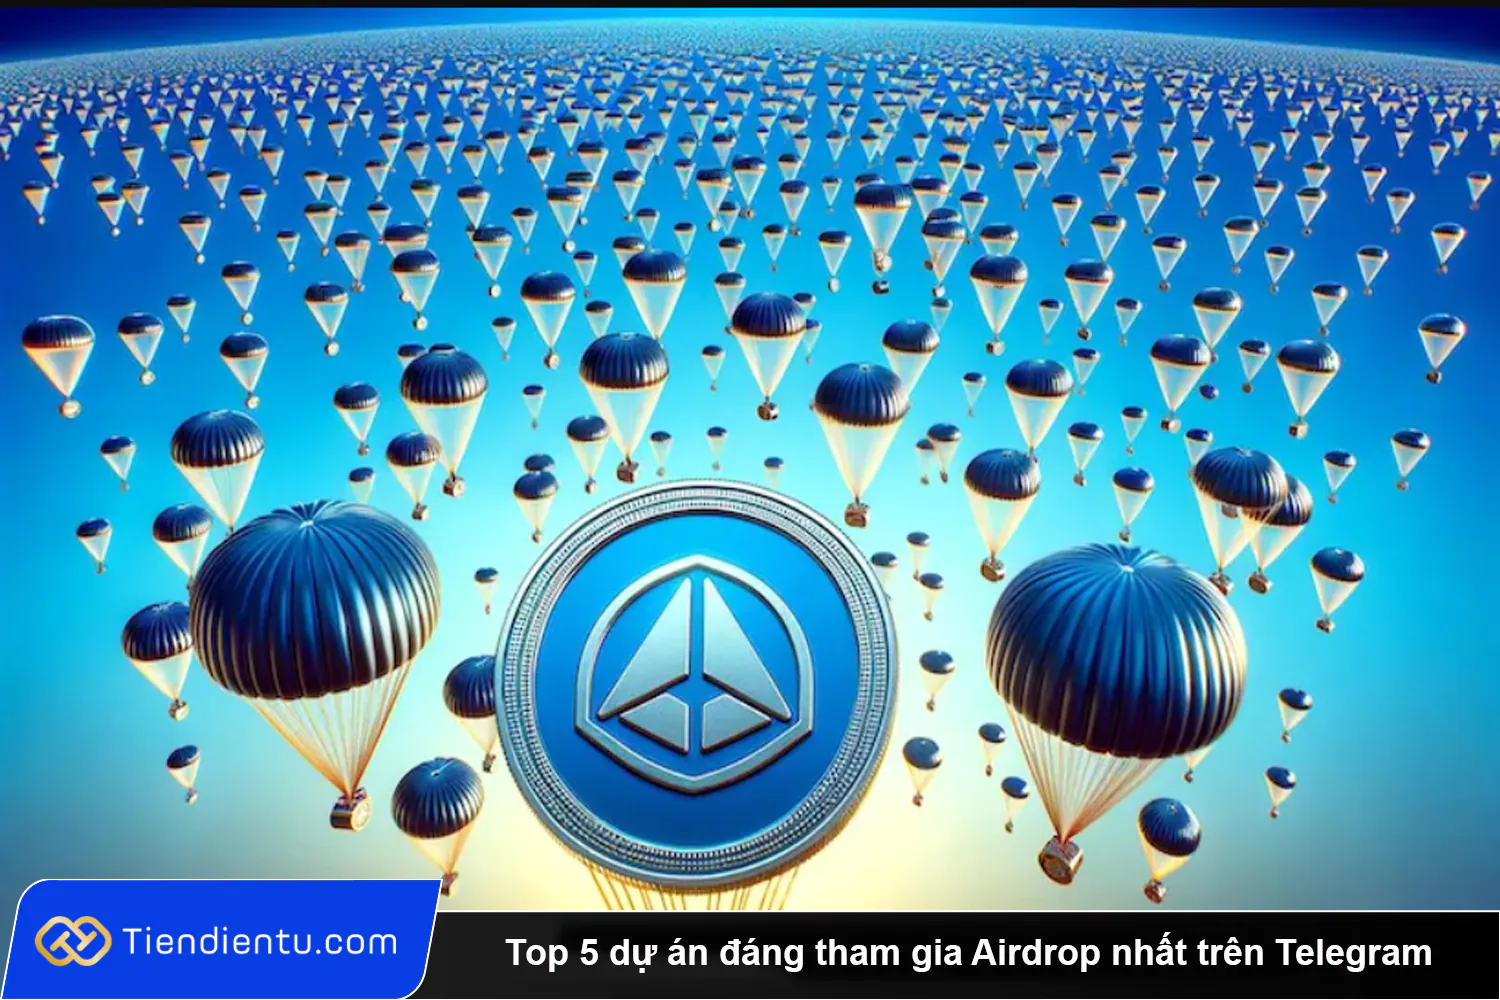 Top 5 du an dang tham gia Airdrop nhat tren Telegram